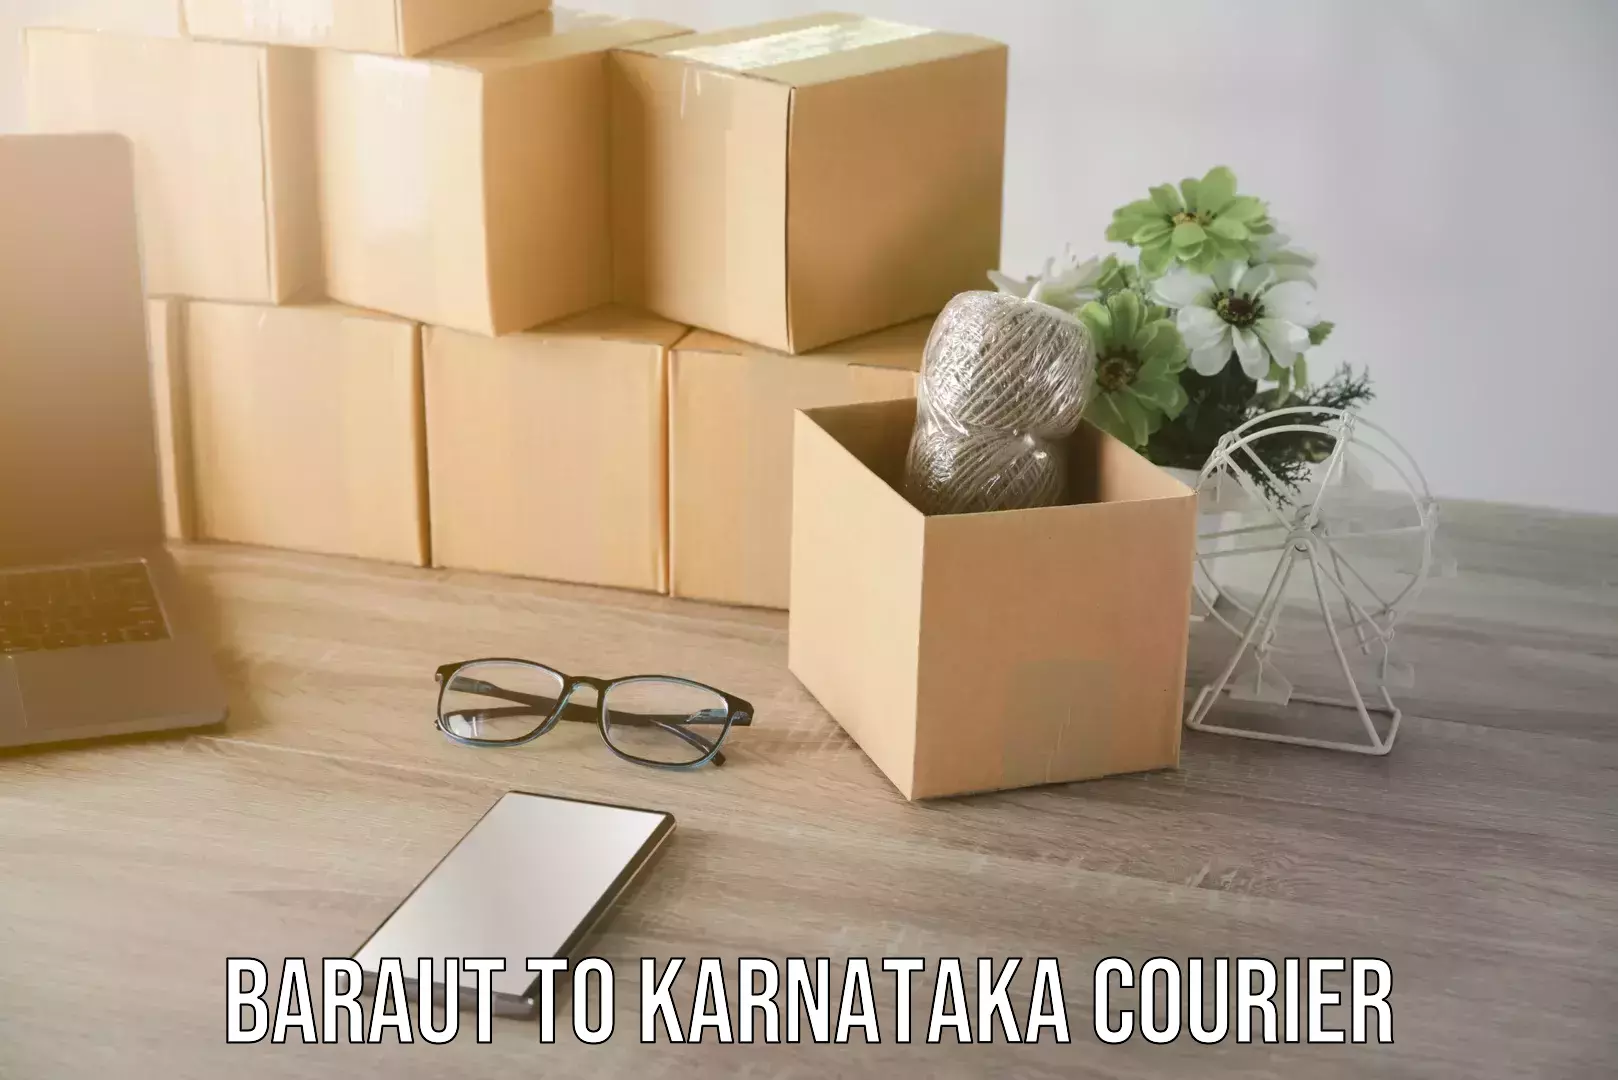 24-hour courier service Baraut to Karnataka